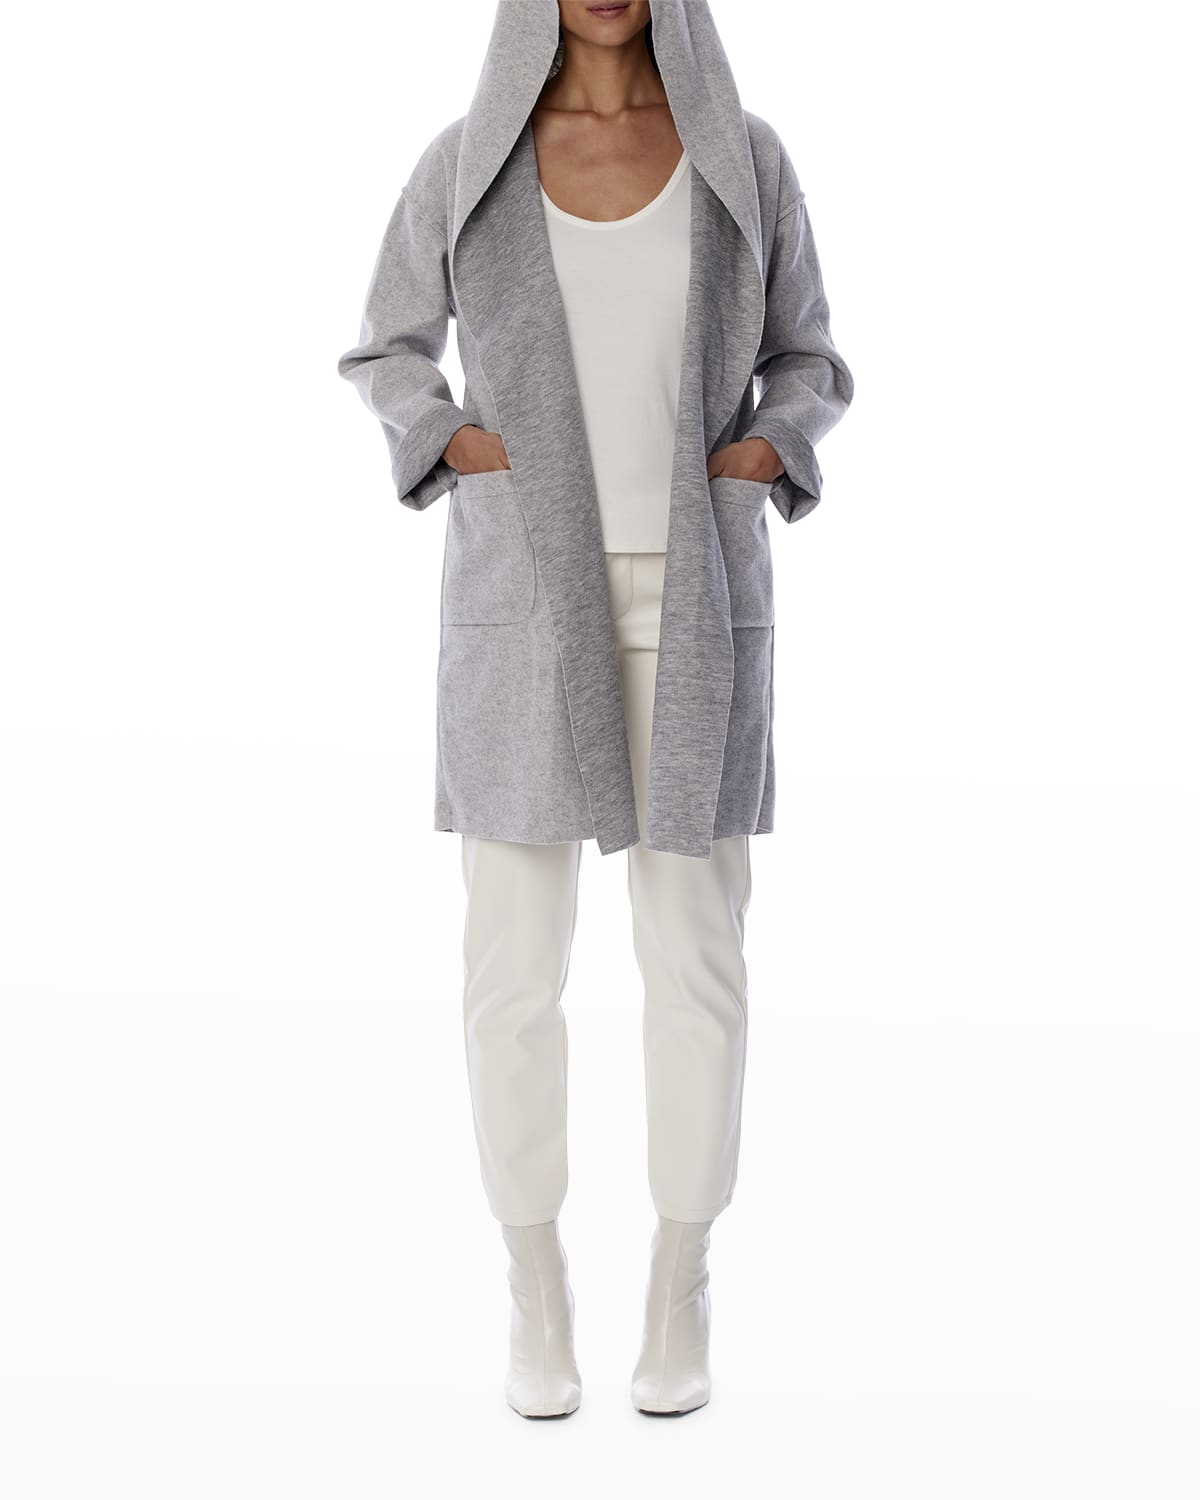 Yajiemen Womens Casual Long Sleeve Open Front Drape Batwing Knitted Cardigan Sweaters White S-XXL 